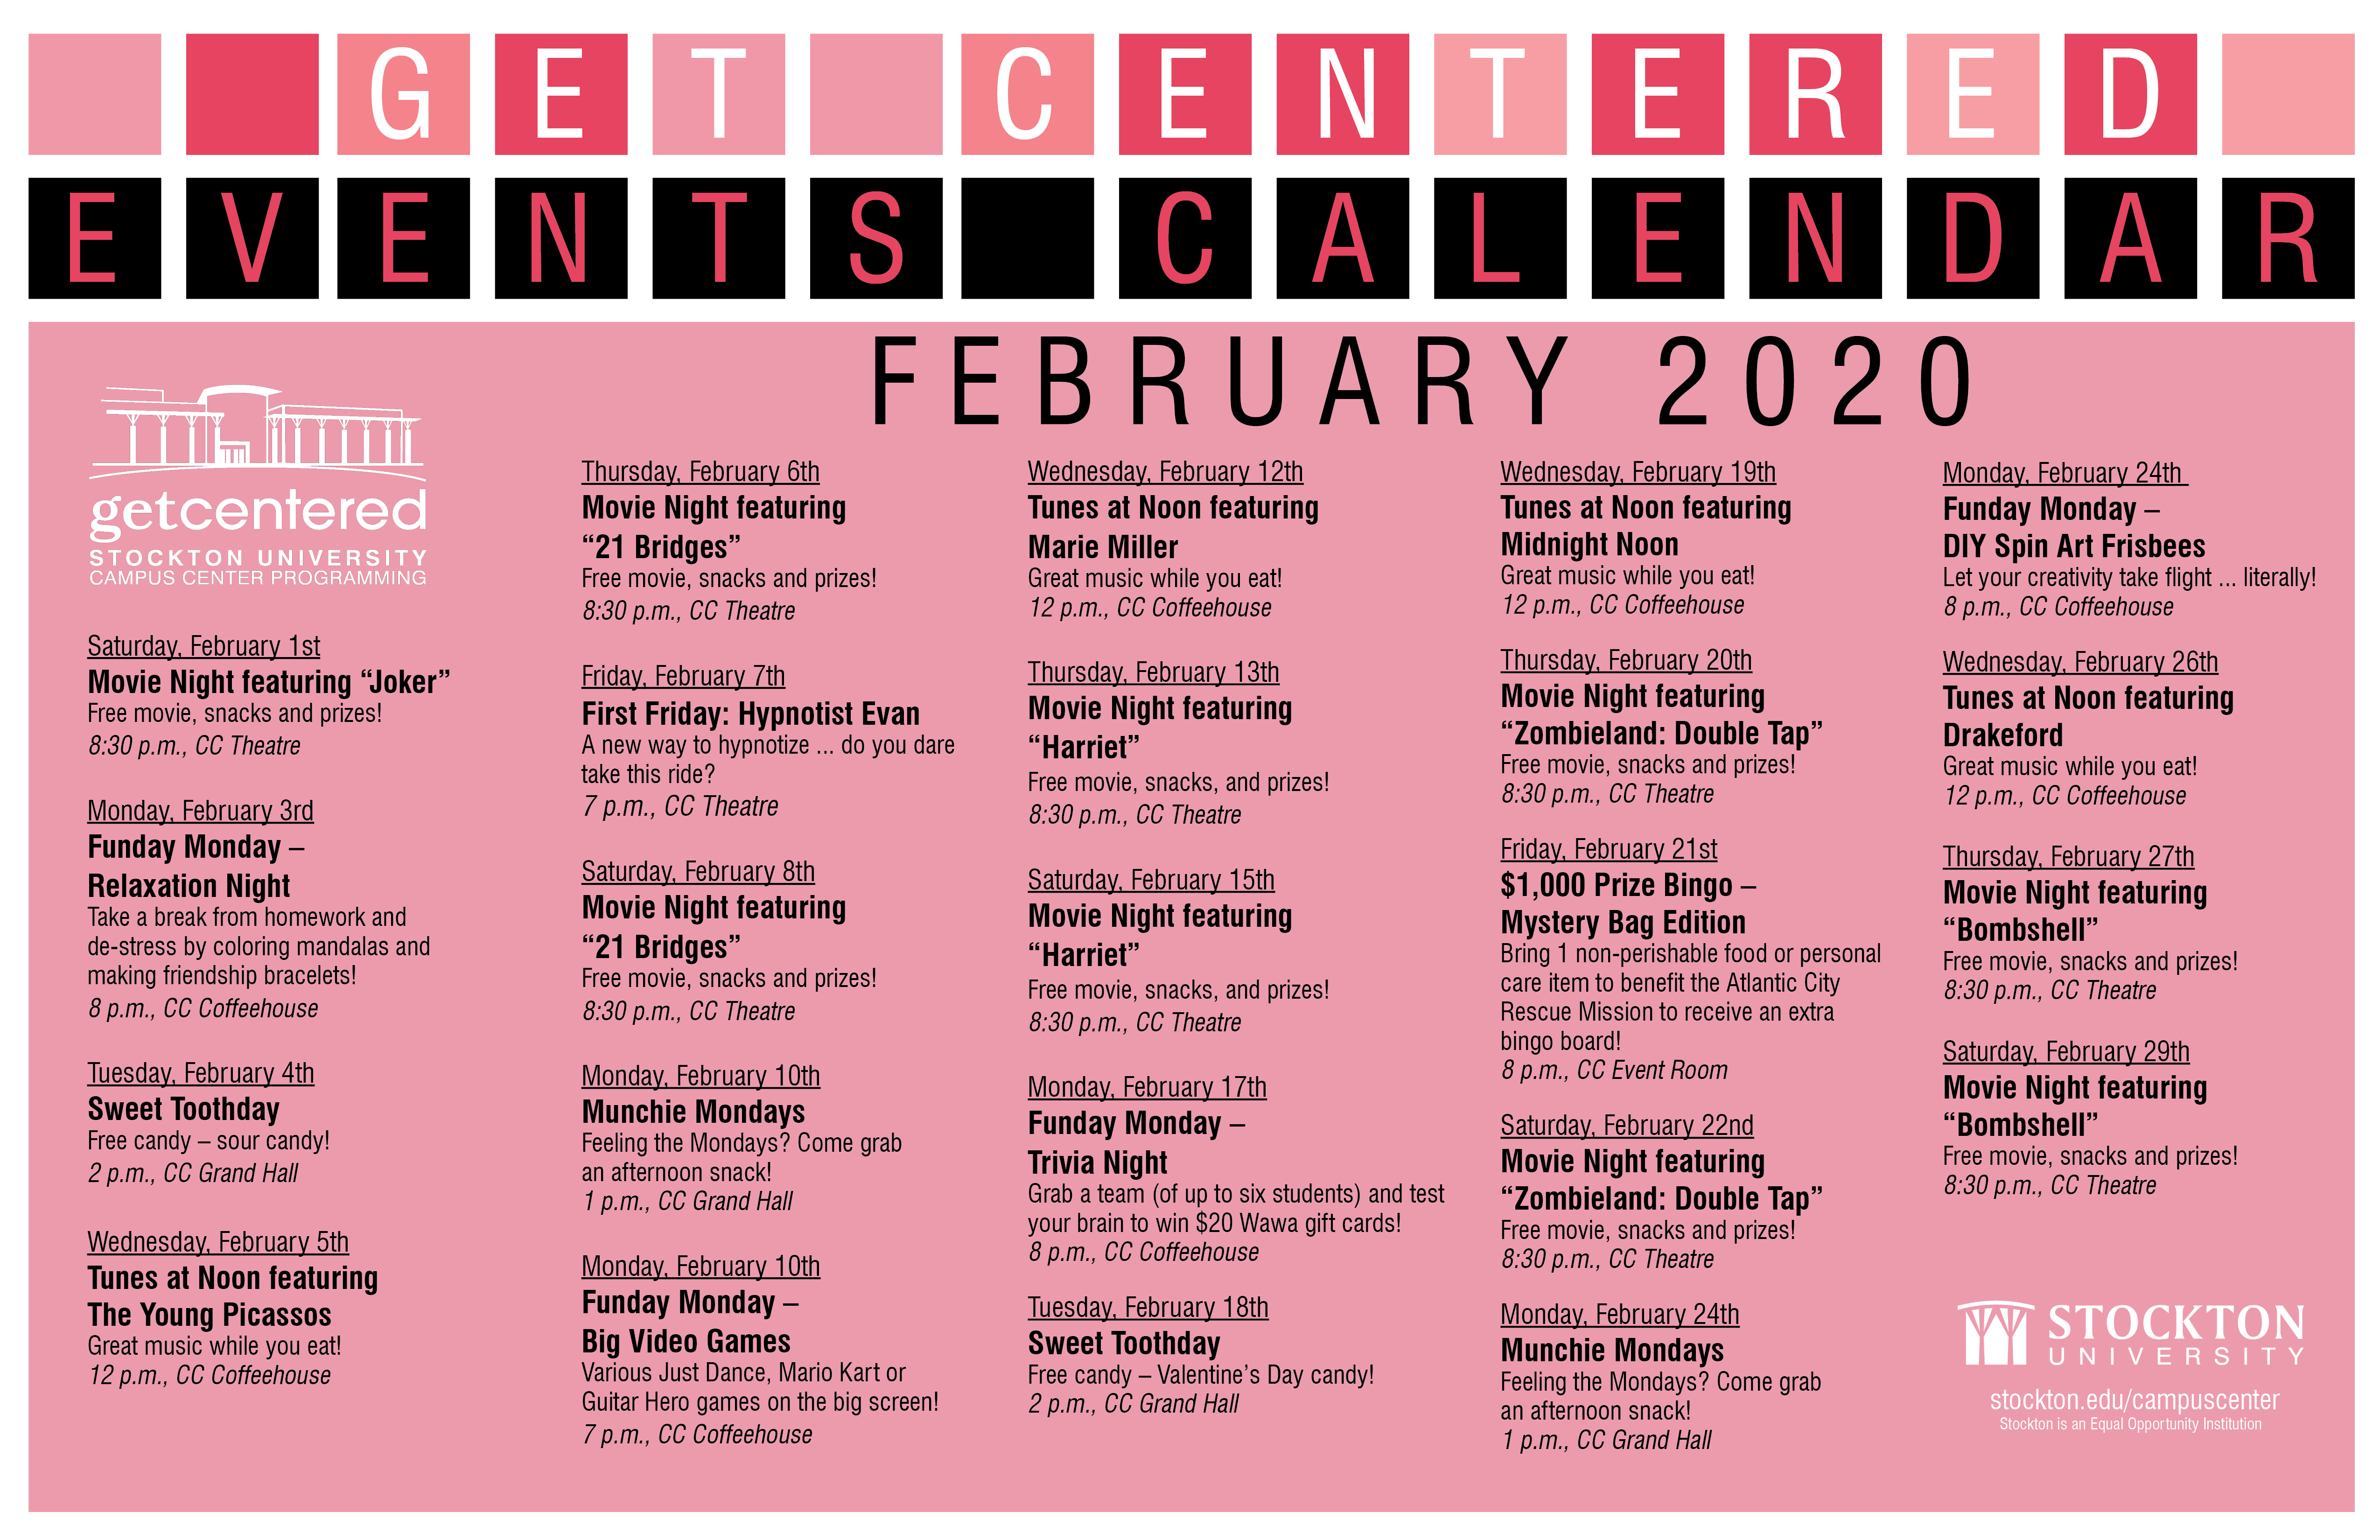 Get Centered Calendar Campus Center Stockton University